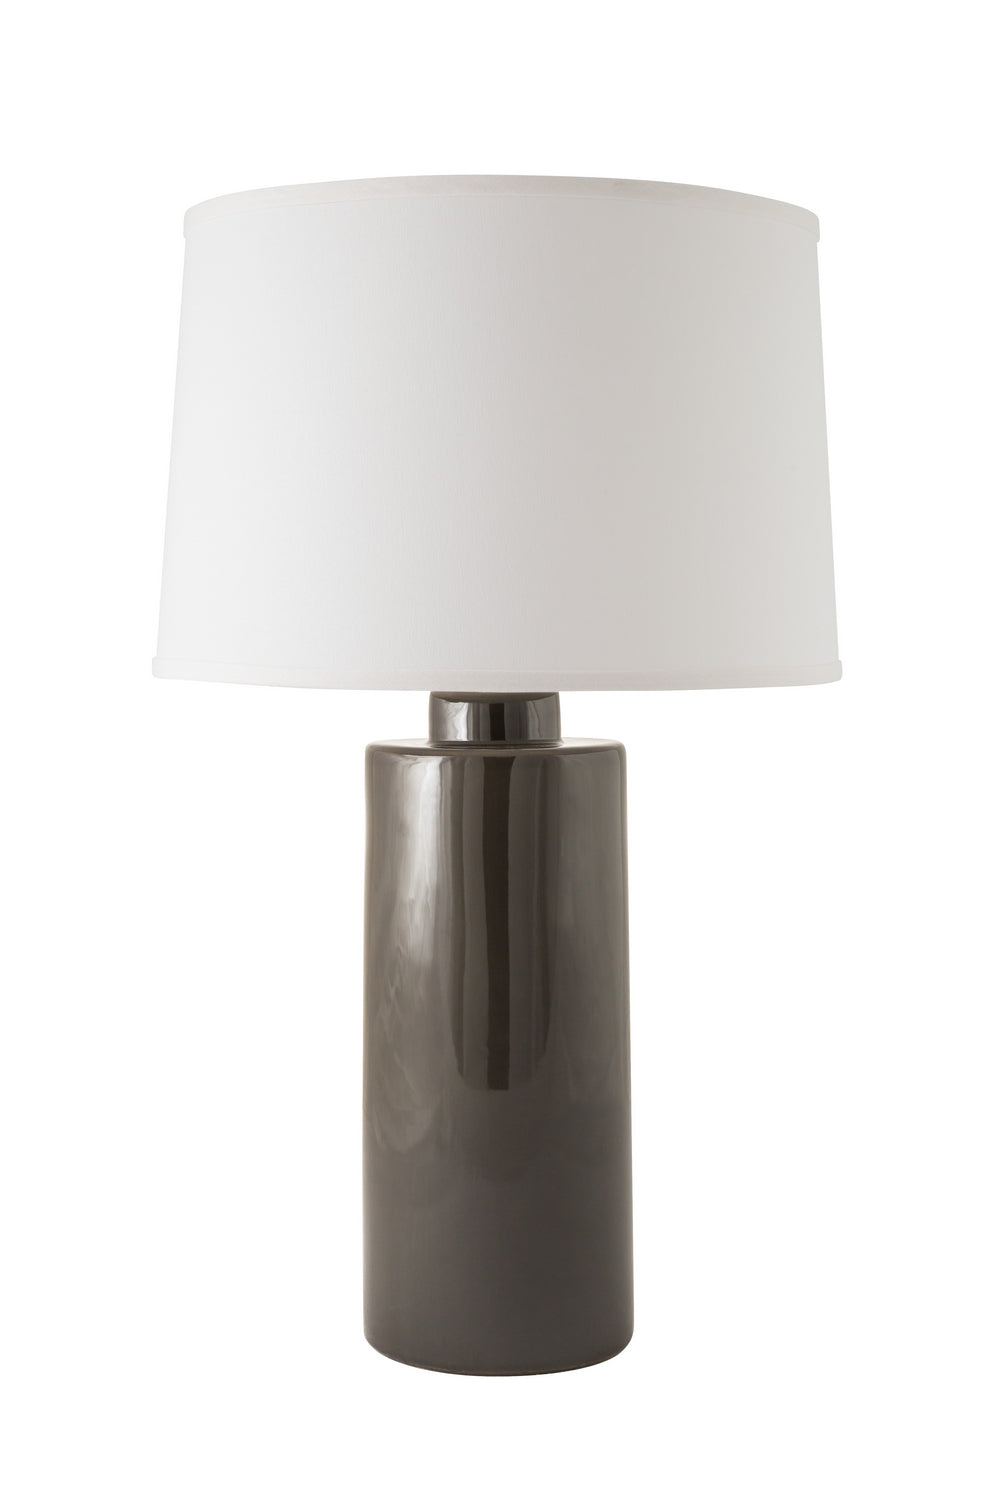 River Ceramic Lighting 439-11 Cylinder One Light Table Lamp Lamp Bronze / Dark